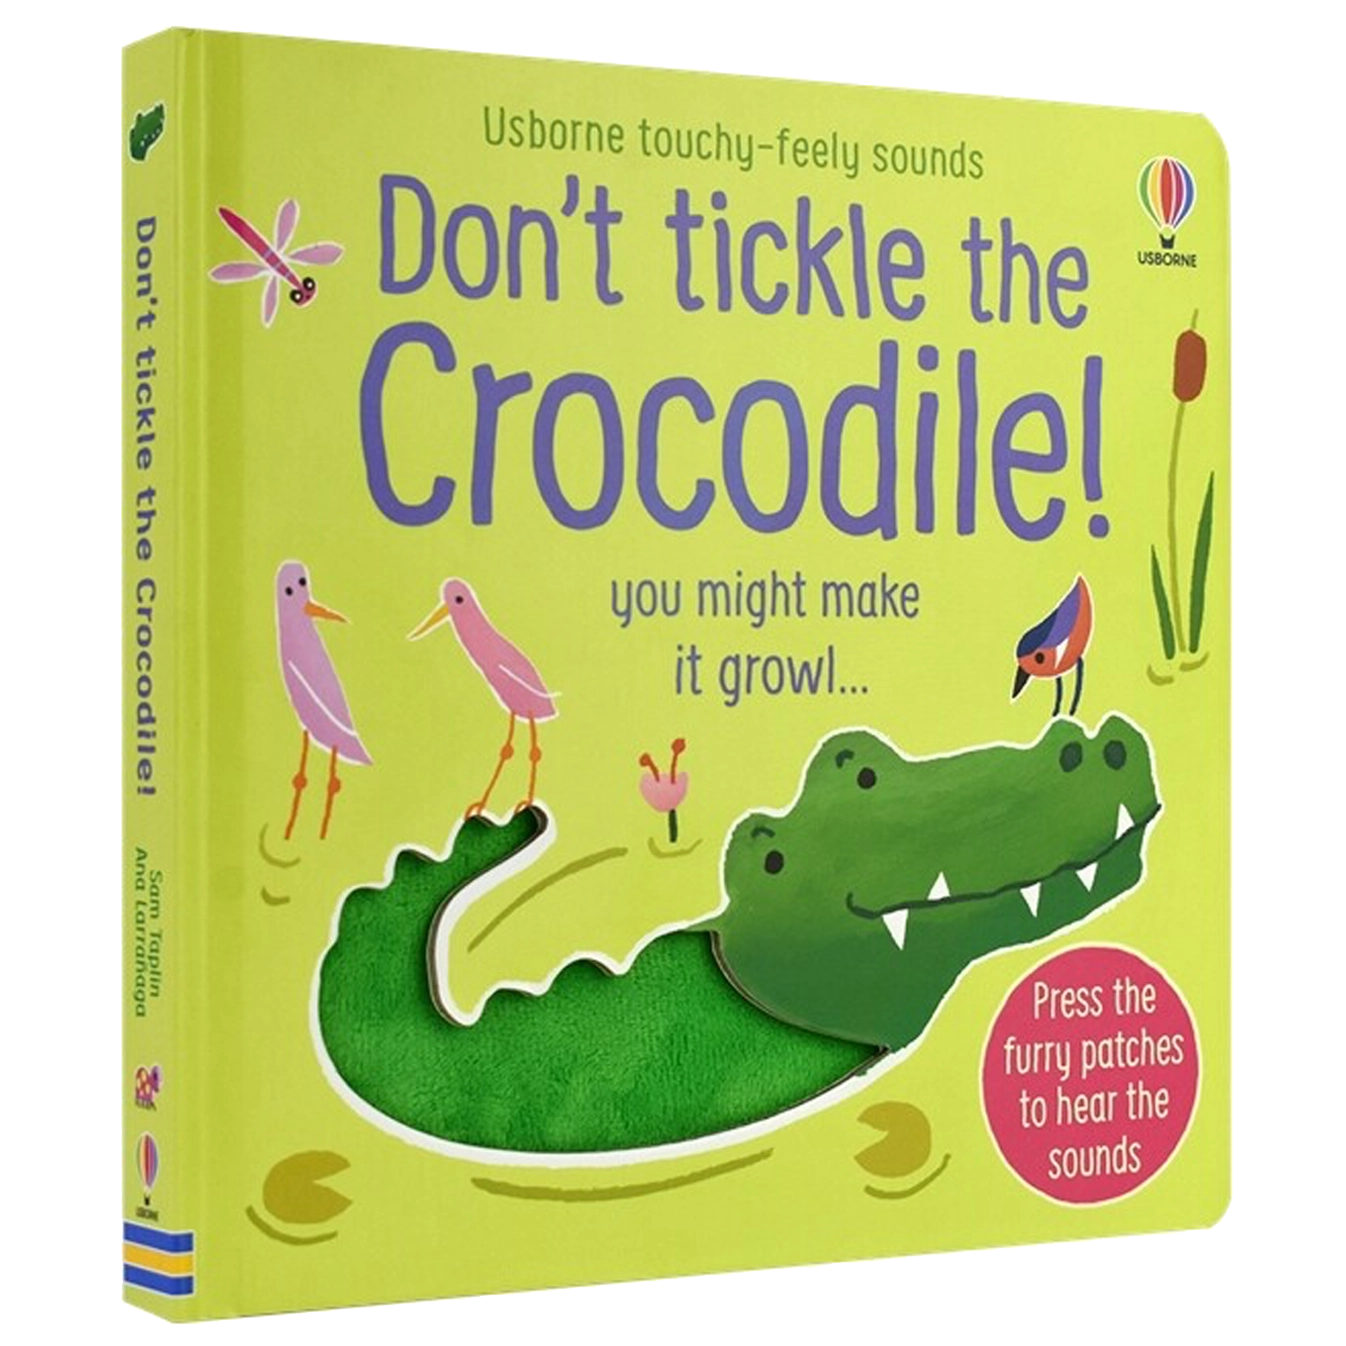 Don't tickle the Crocodile!